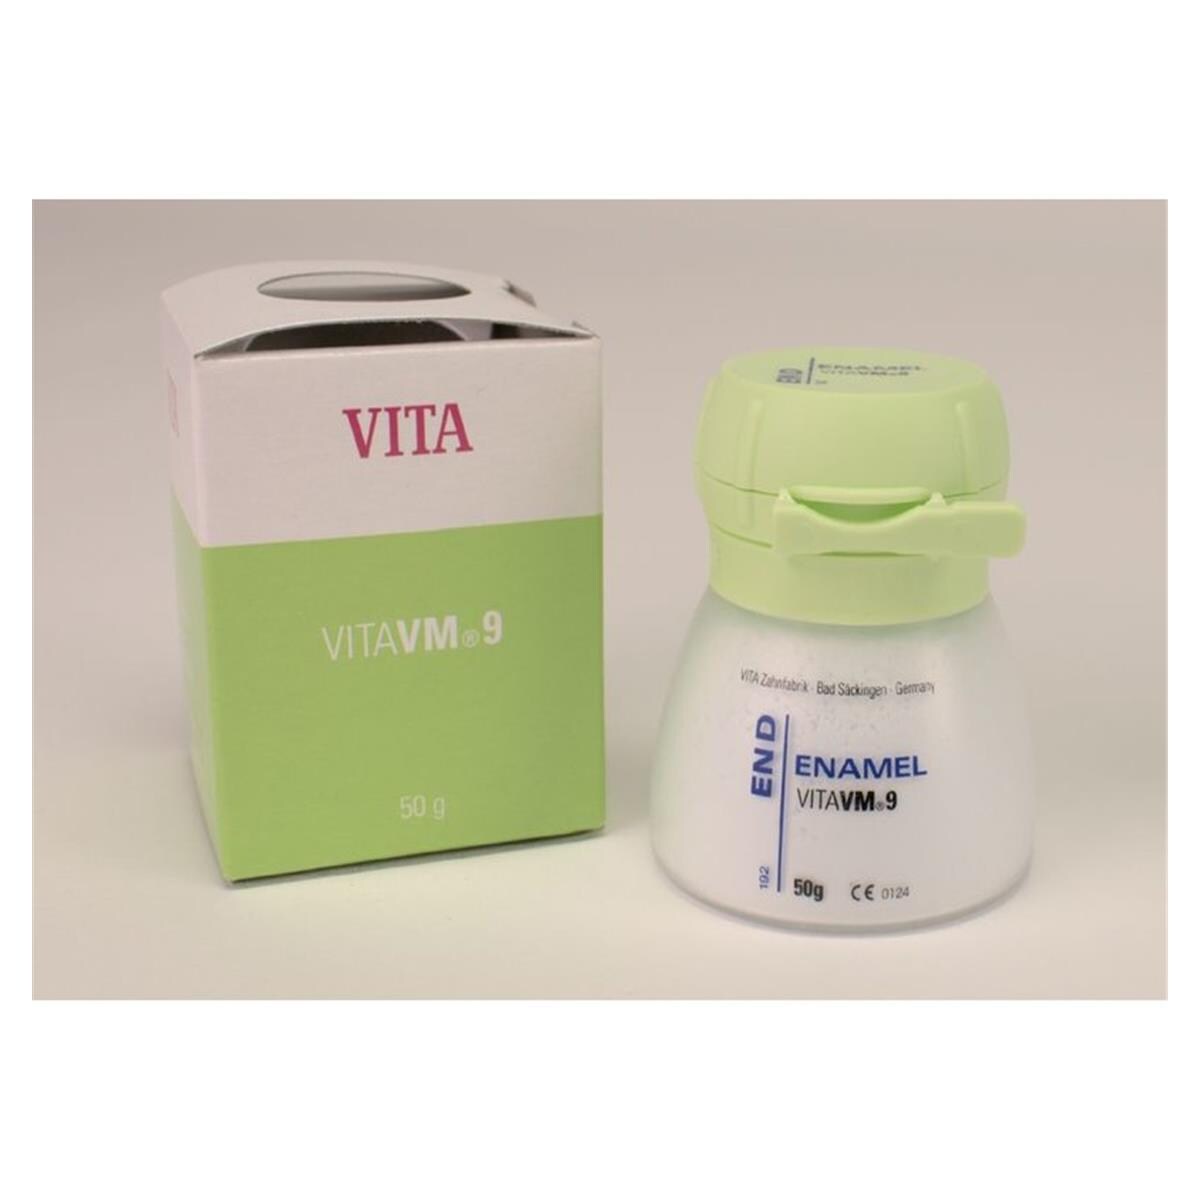 VM9 VITA - Enamel - END - Le pot de 12 g